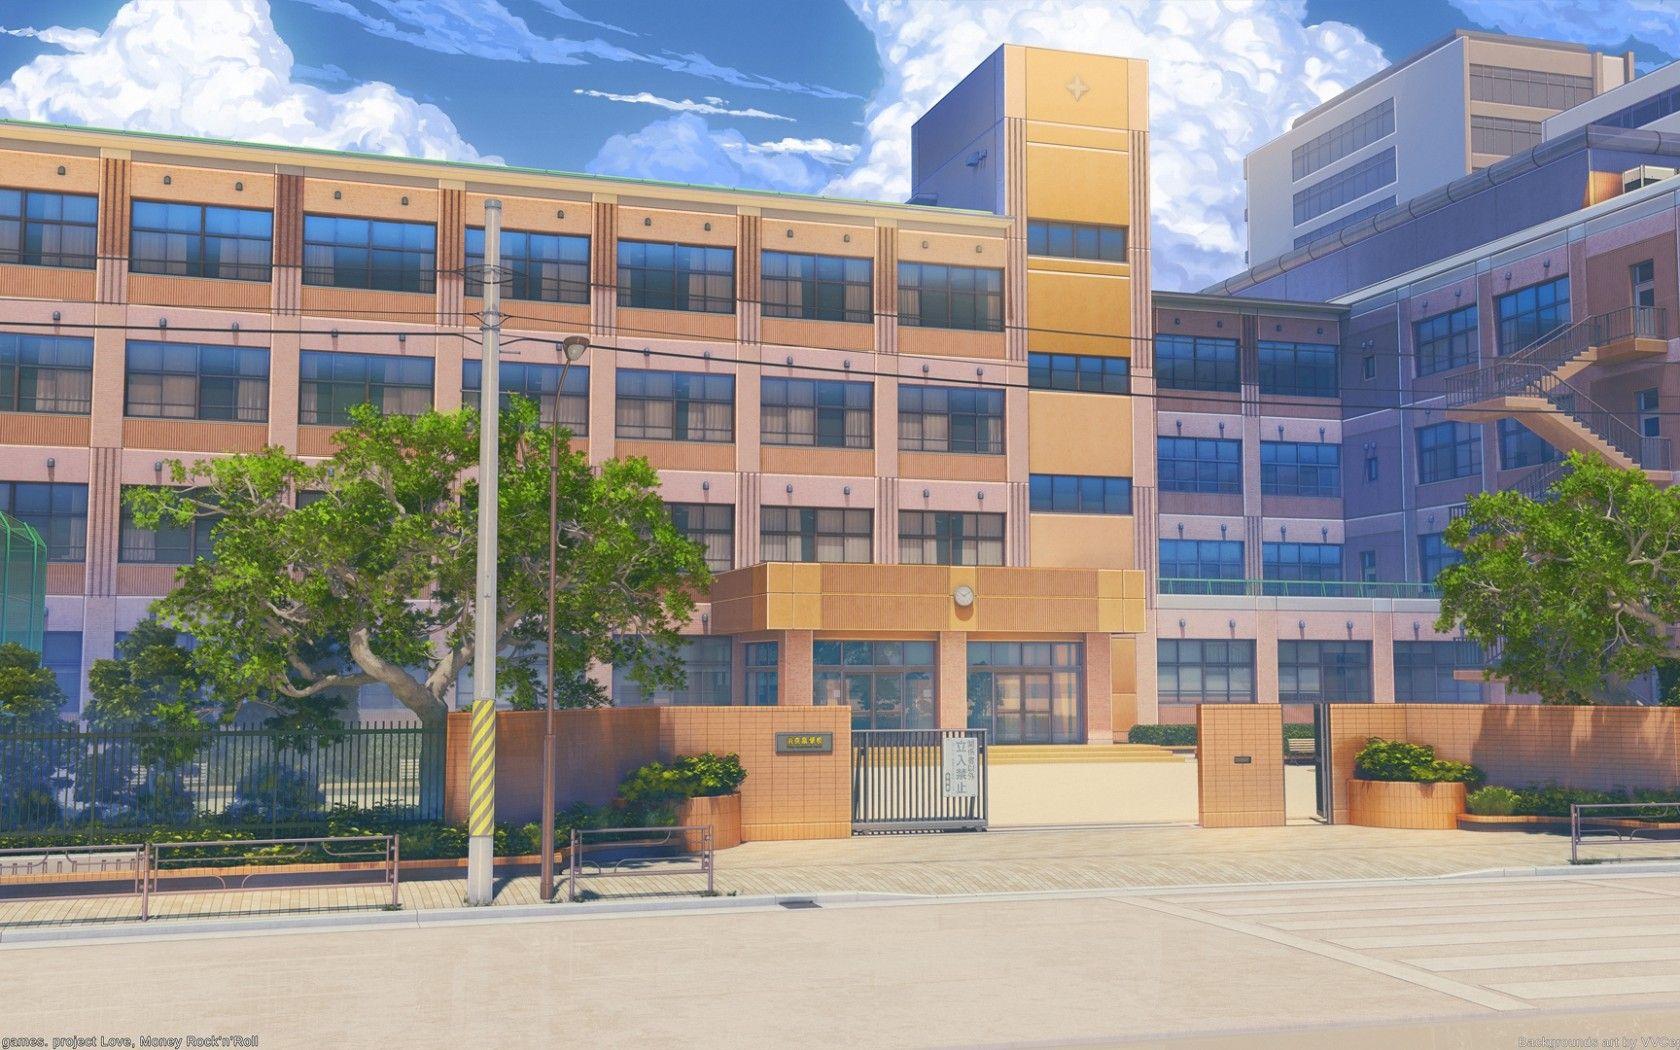 Download 1680x1050 Anime School, Scenic, Building, Artwork, Sky